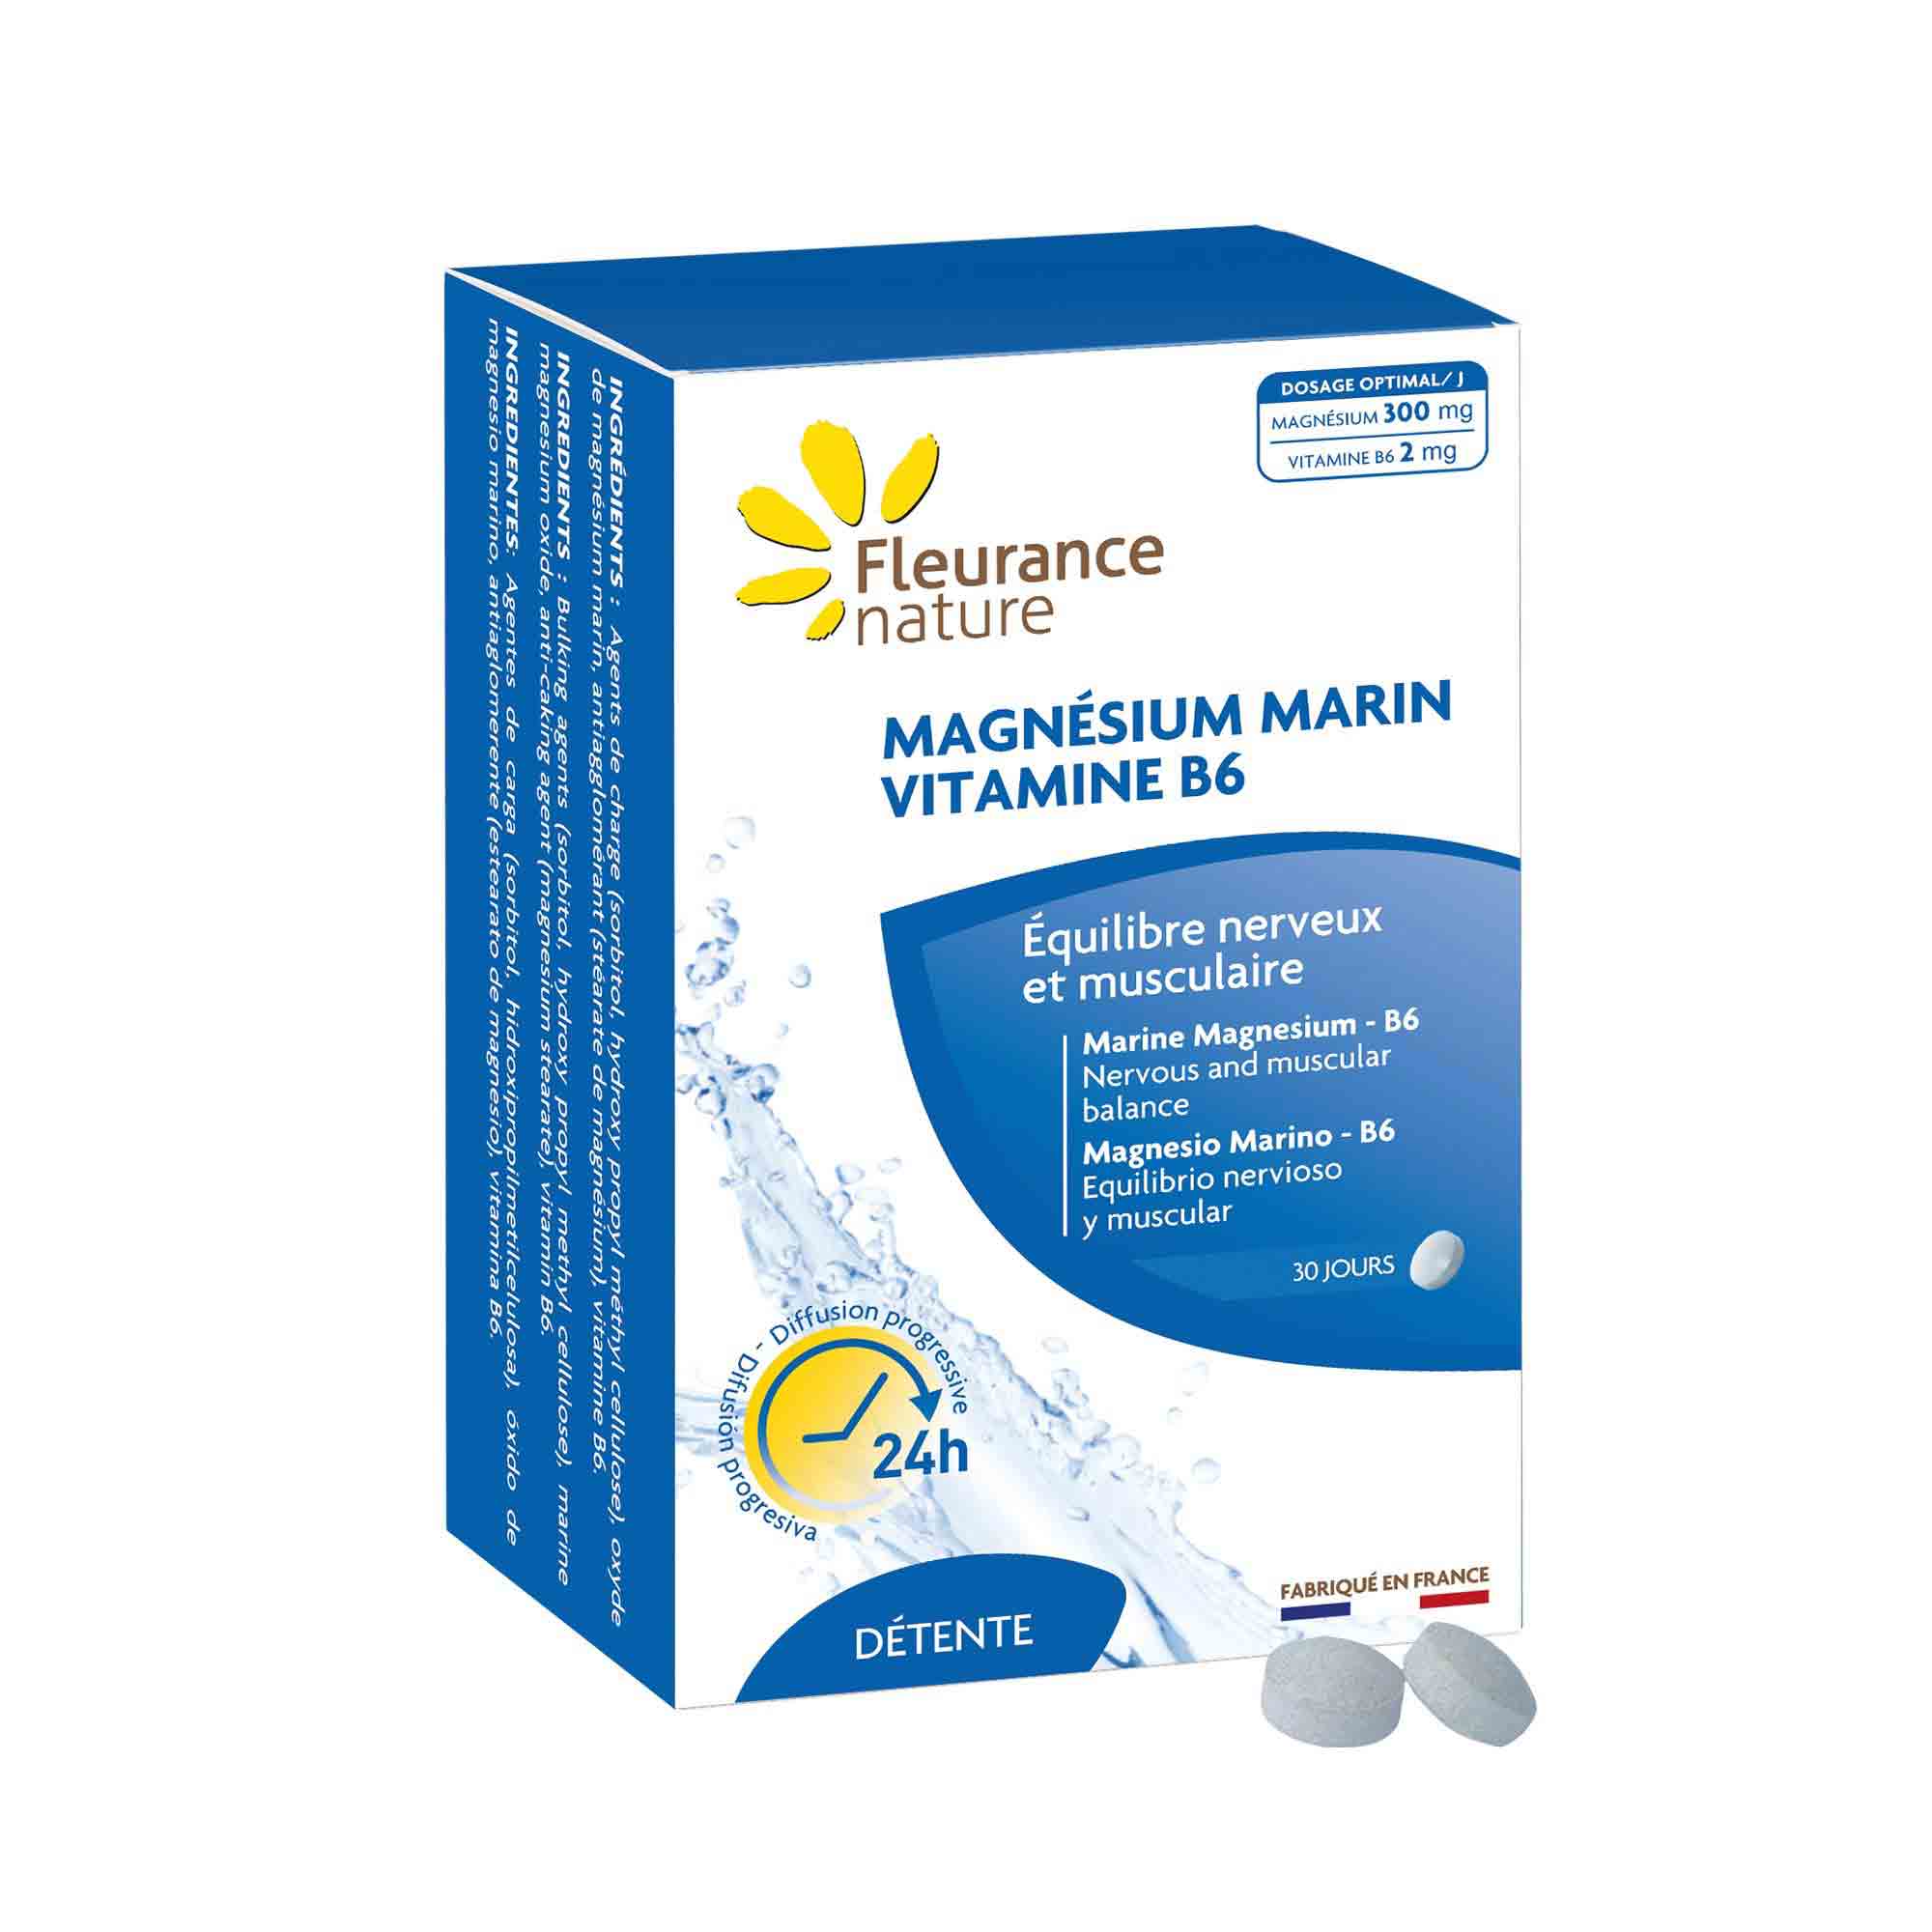 Magnésium marin B6 complément alimentaire